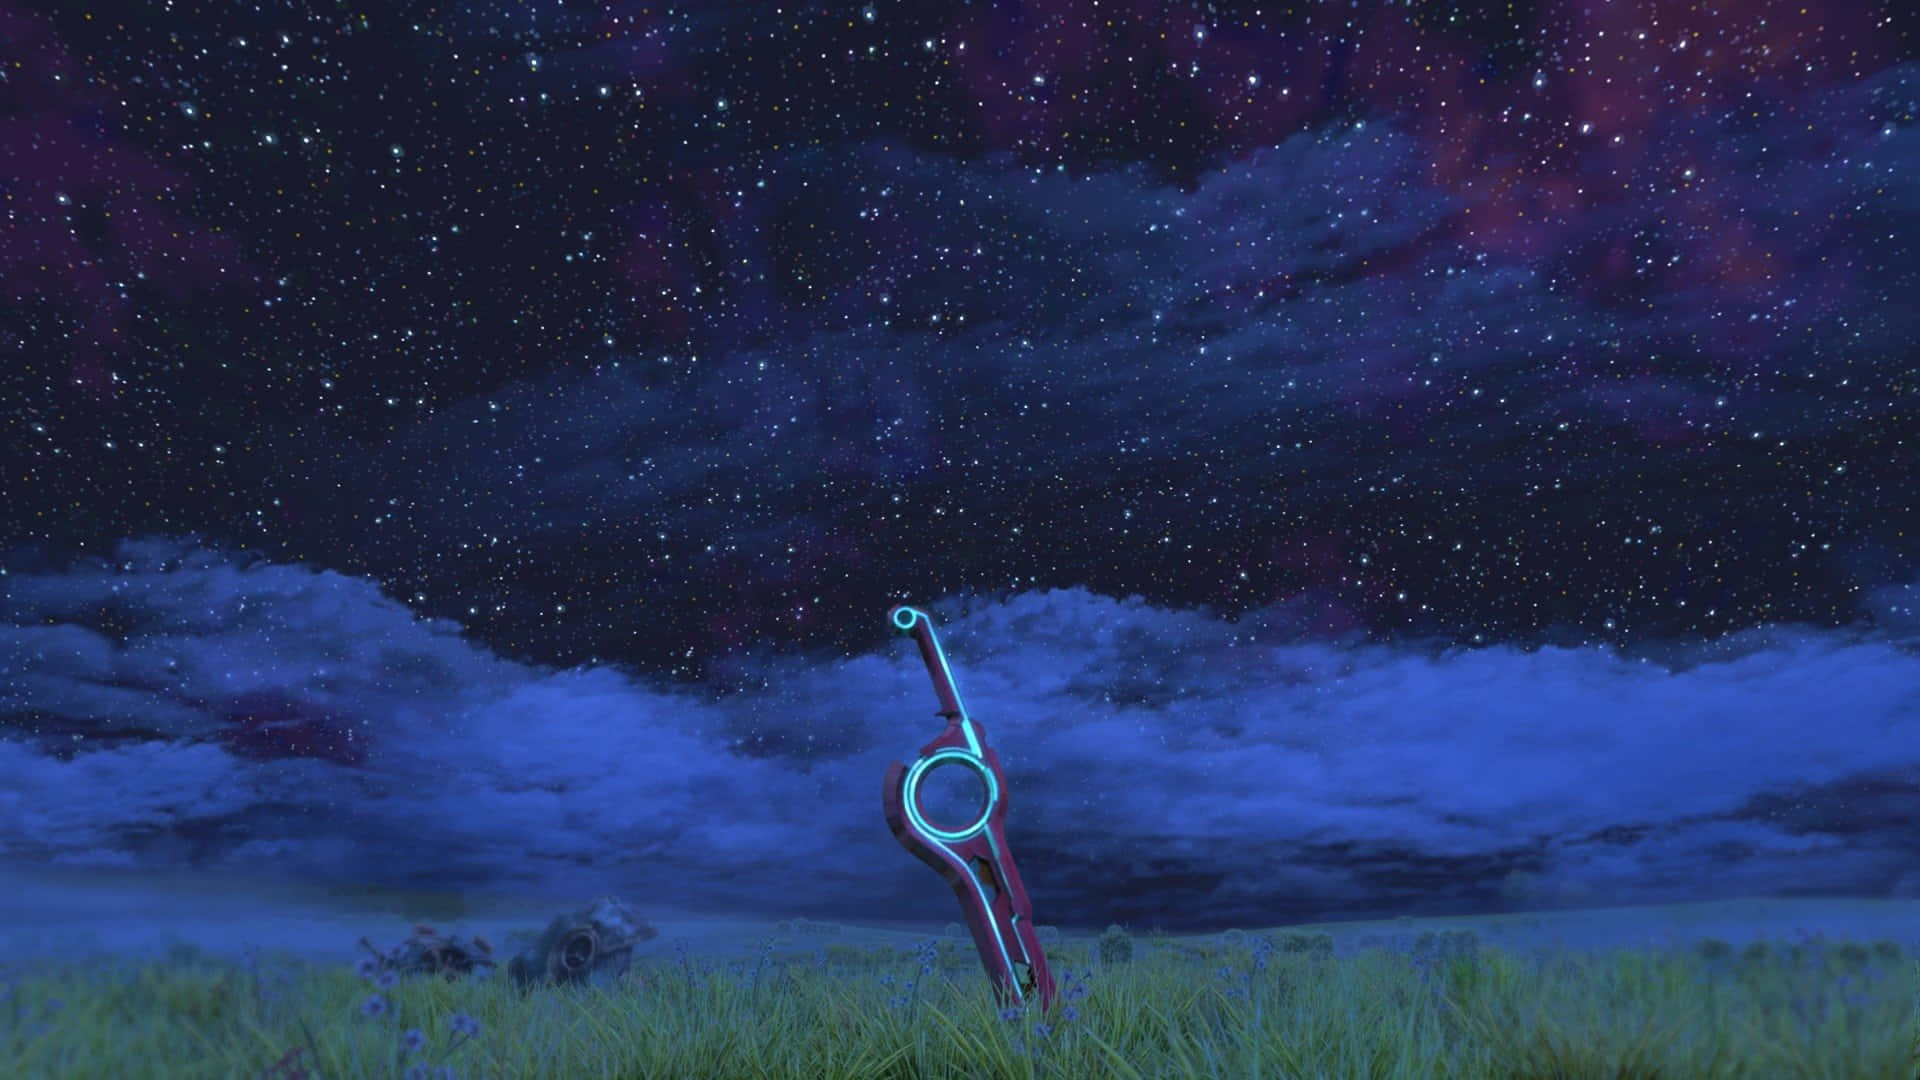 A Sword In The Grass Under A Starry Sky Wallpaper